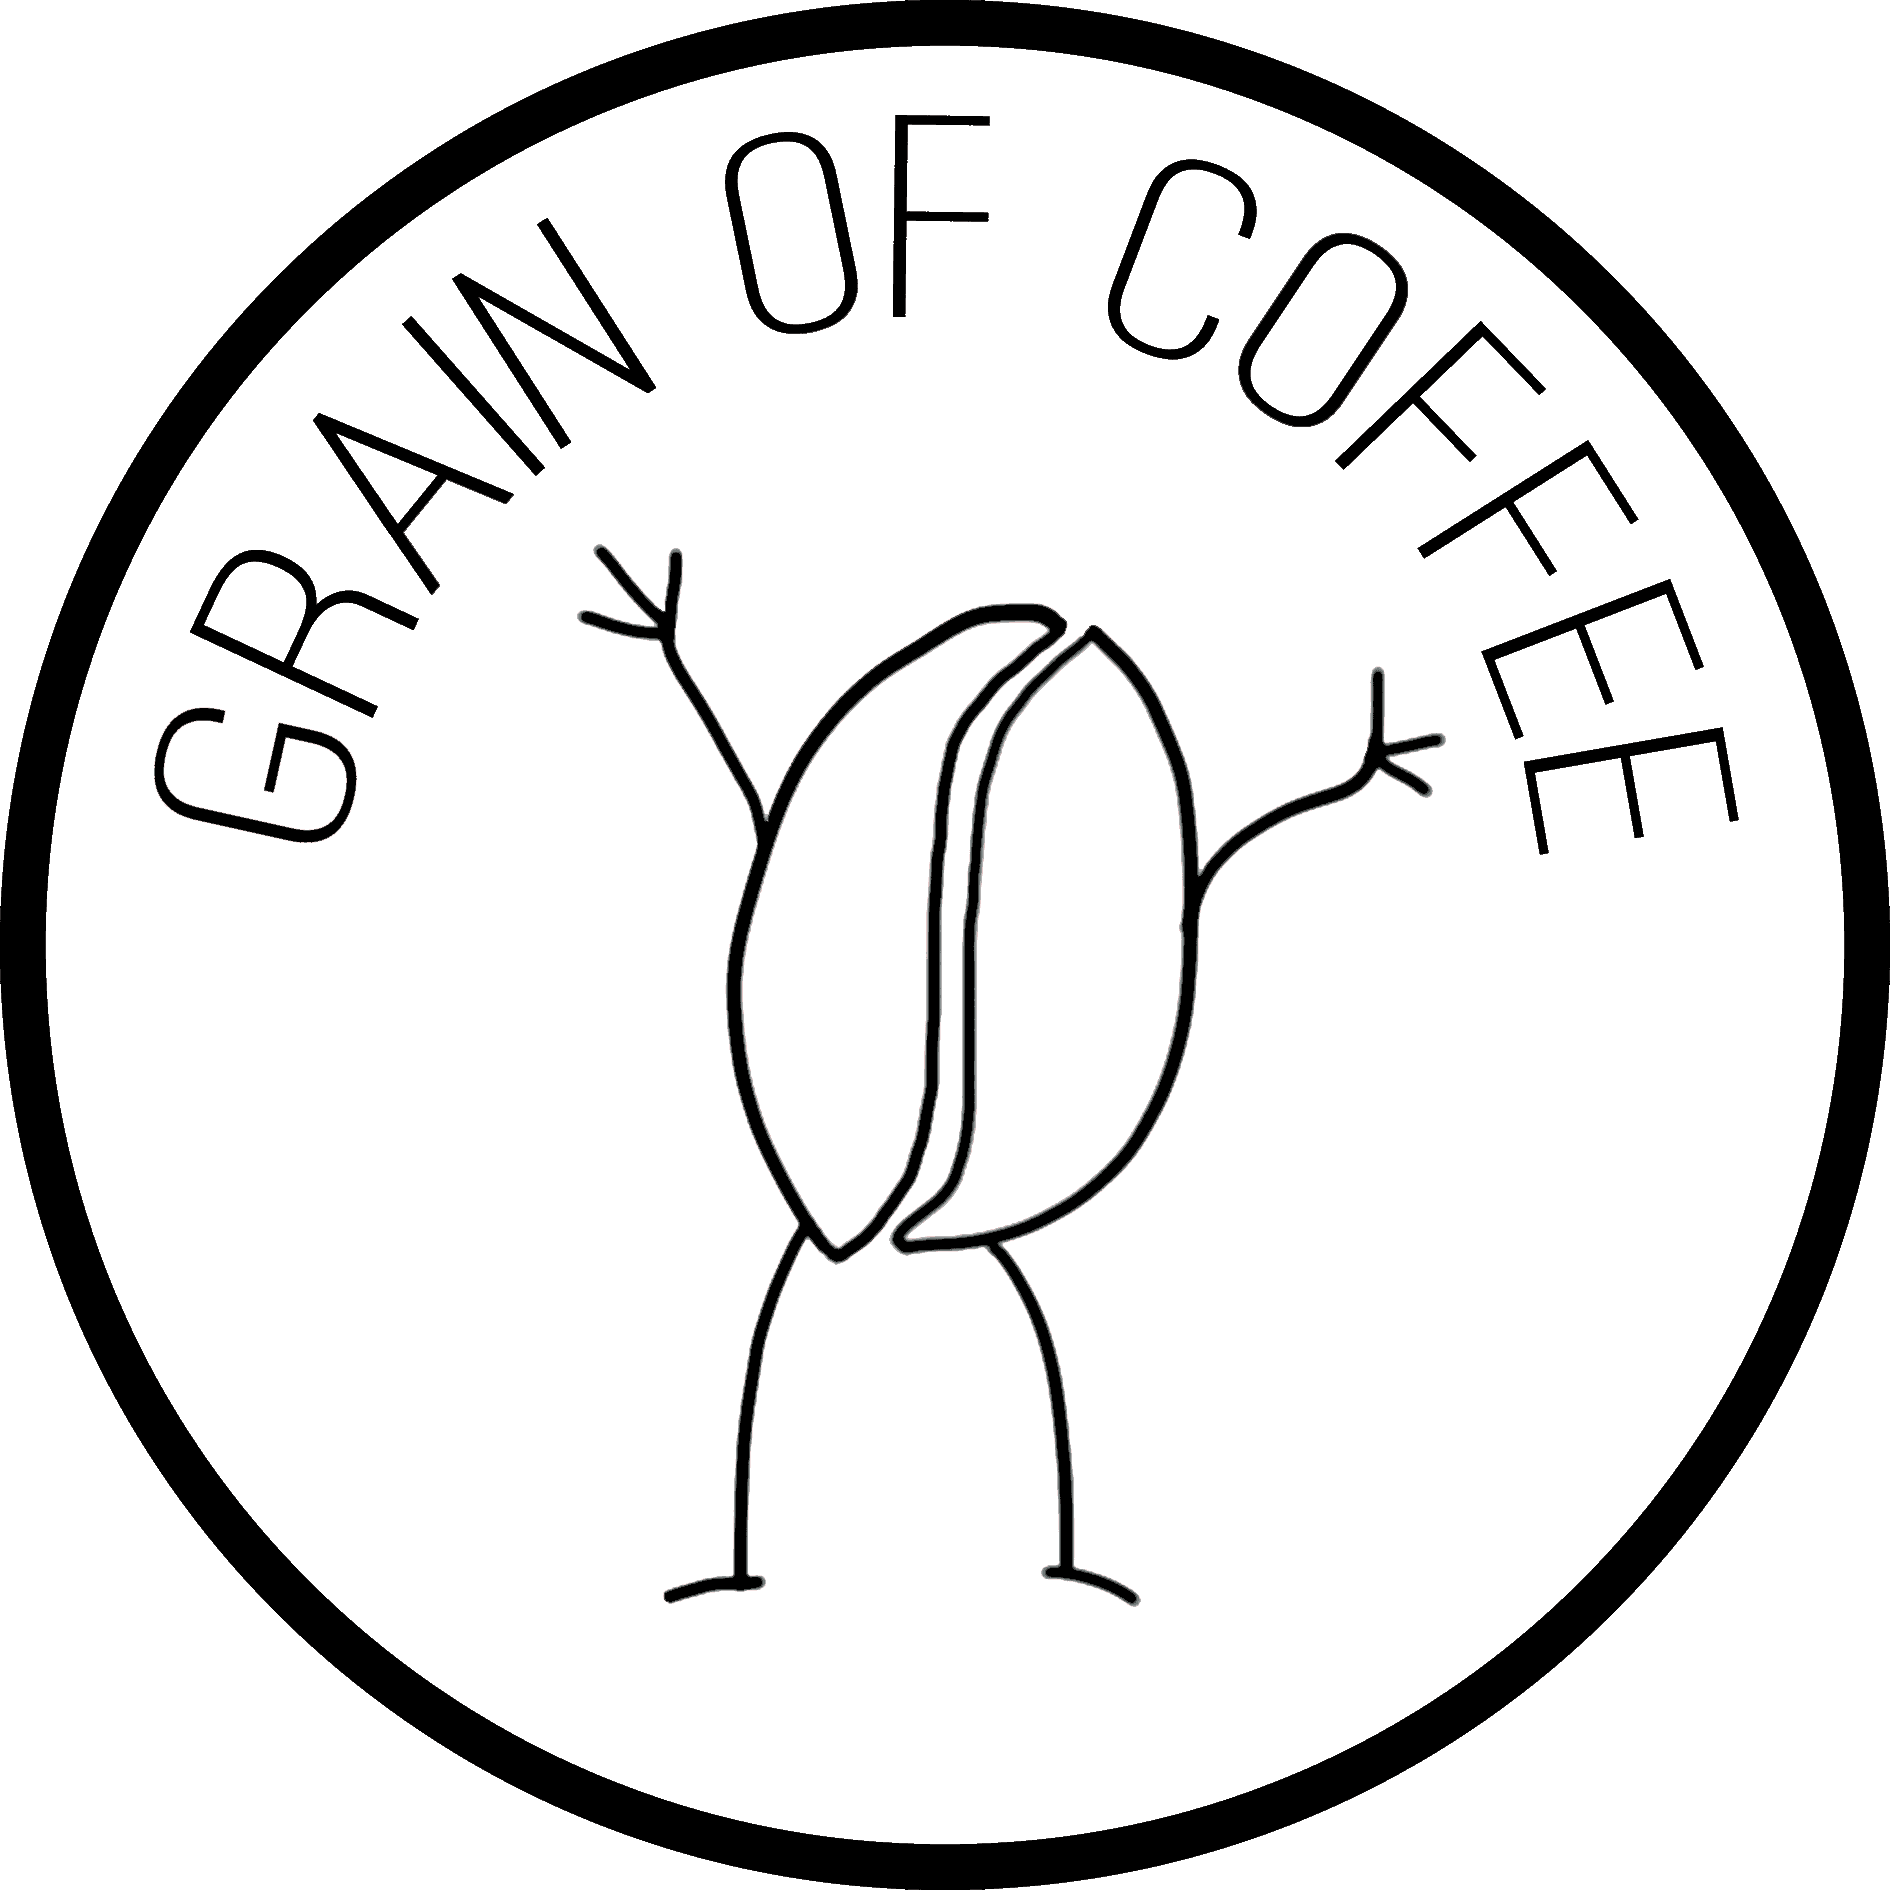 GRAIN OF COFFEE